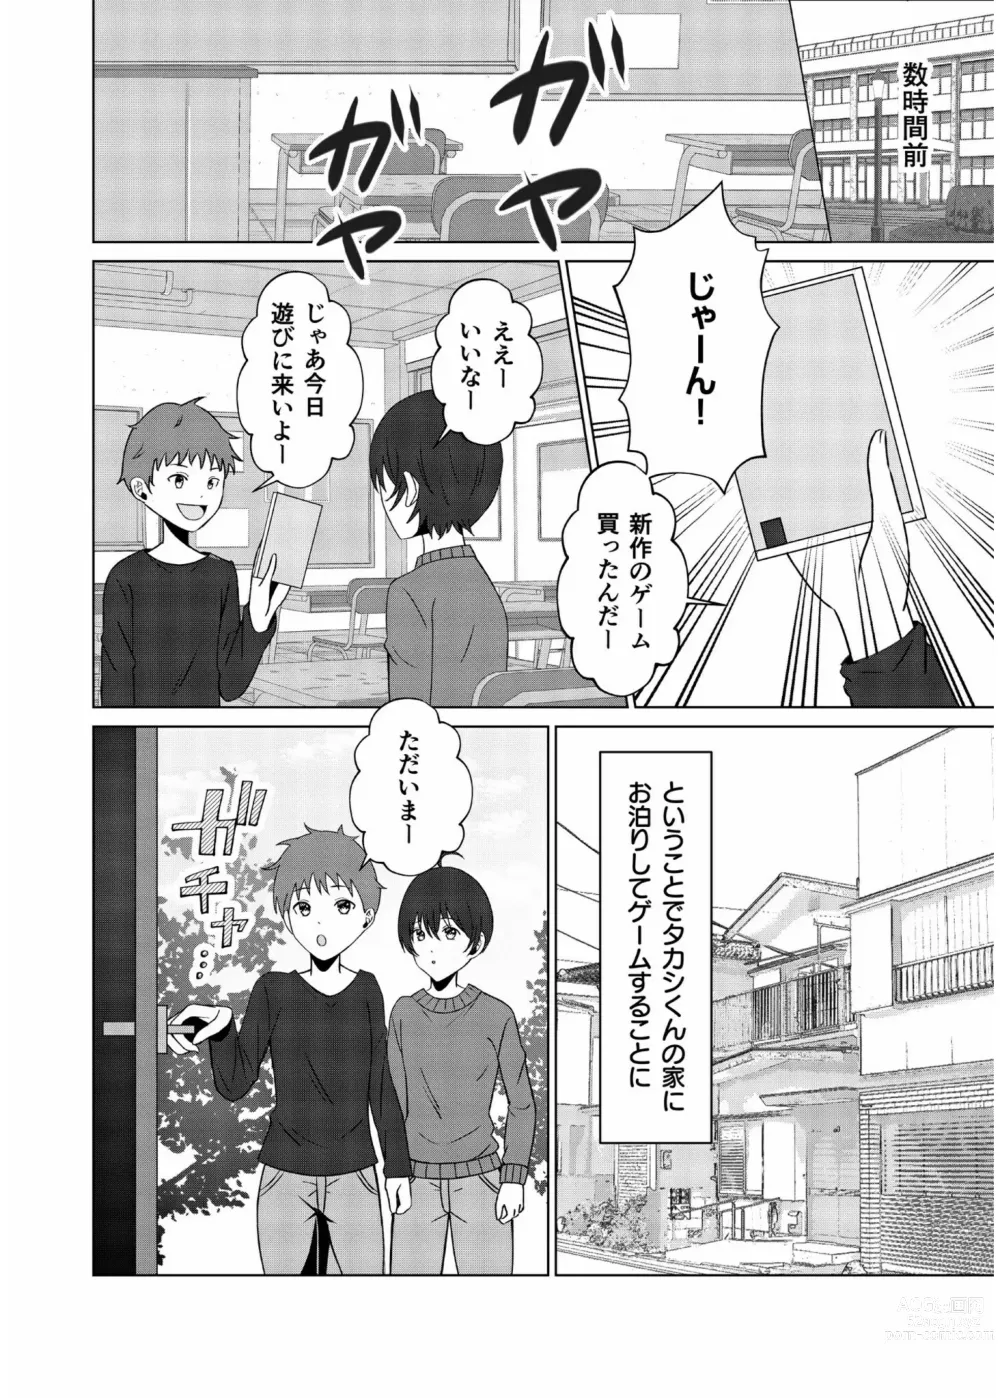 Page 6 of manga COMIC SPLINE Vol.2